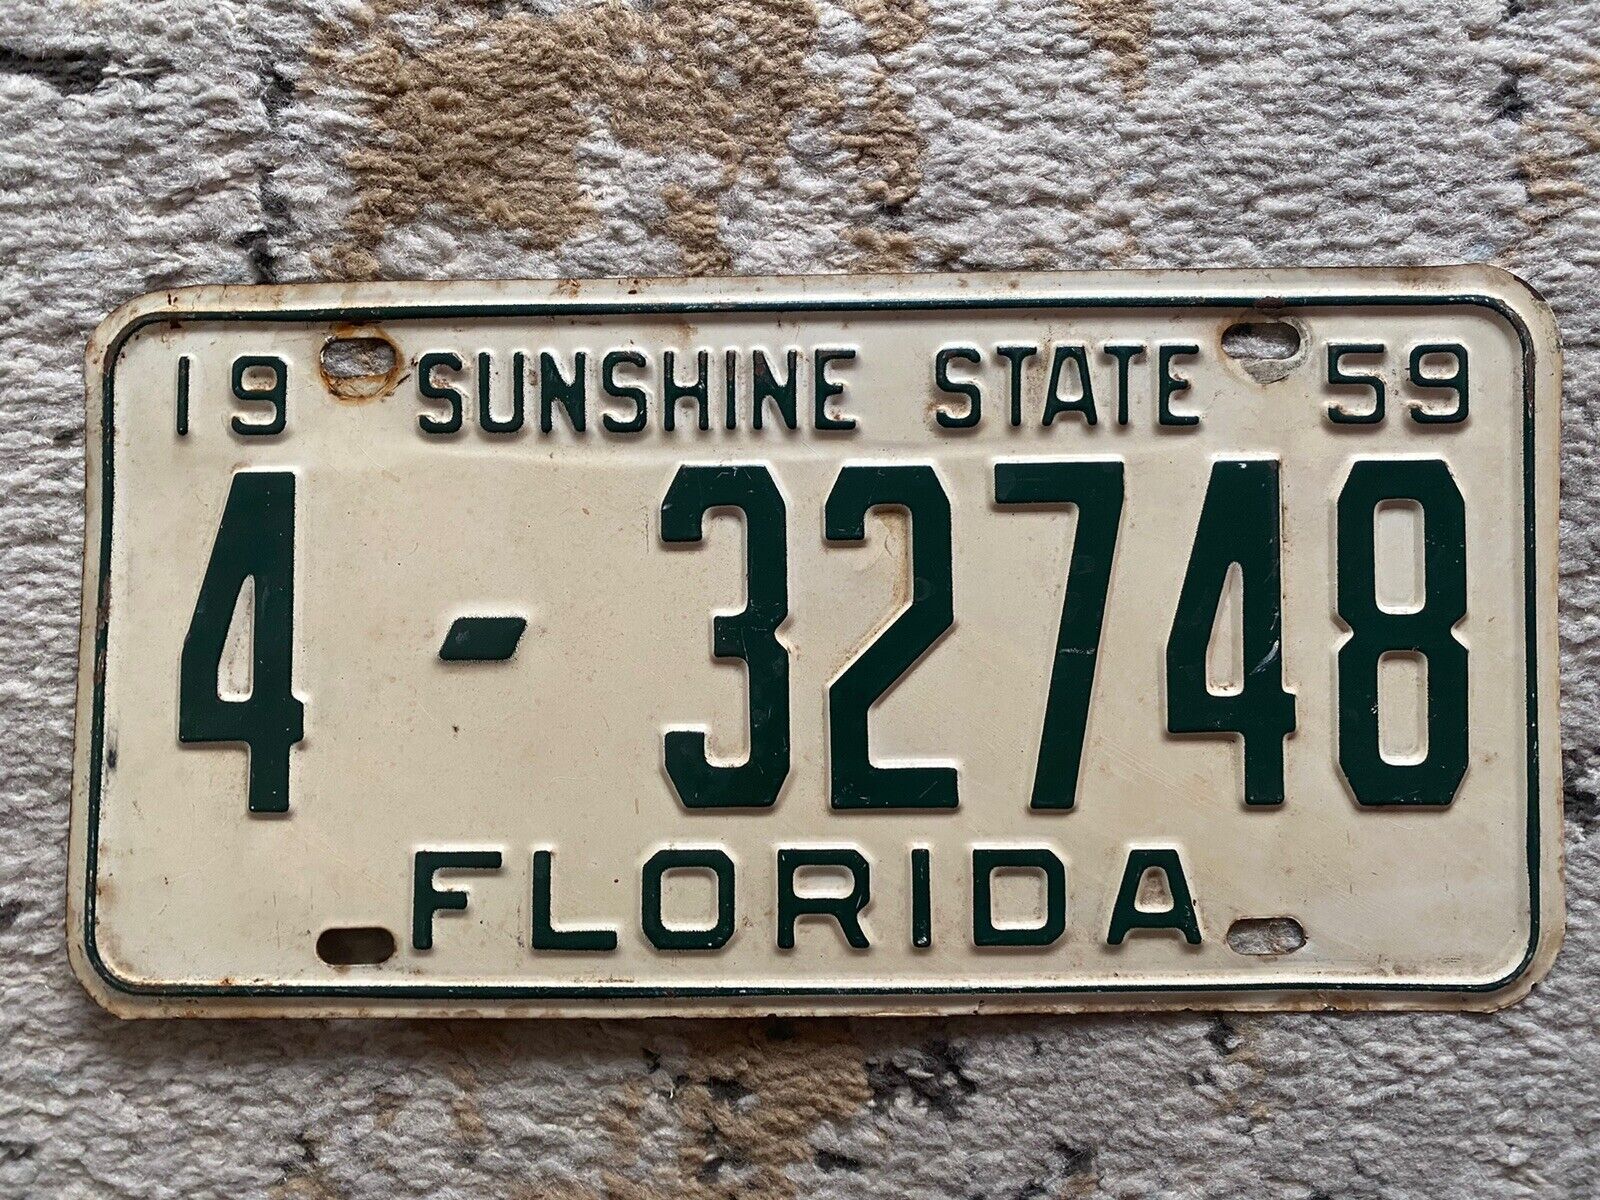 Vintage Orig. 1959 Florida License Plate 4 32748 FL Pinellas County